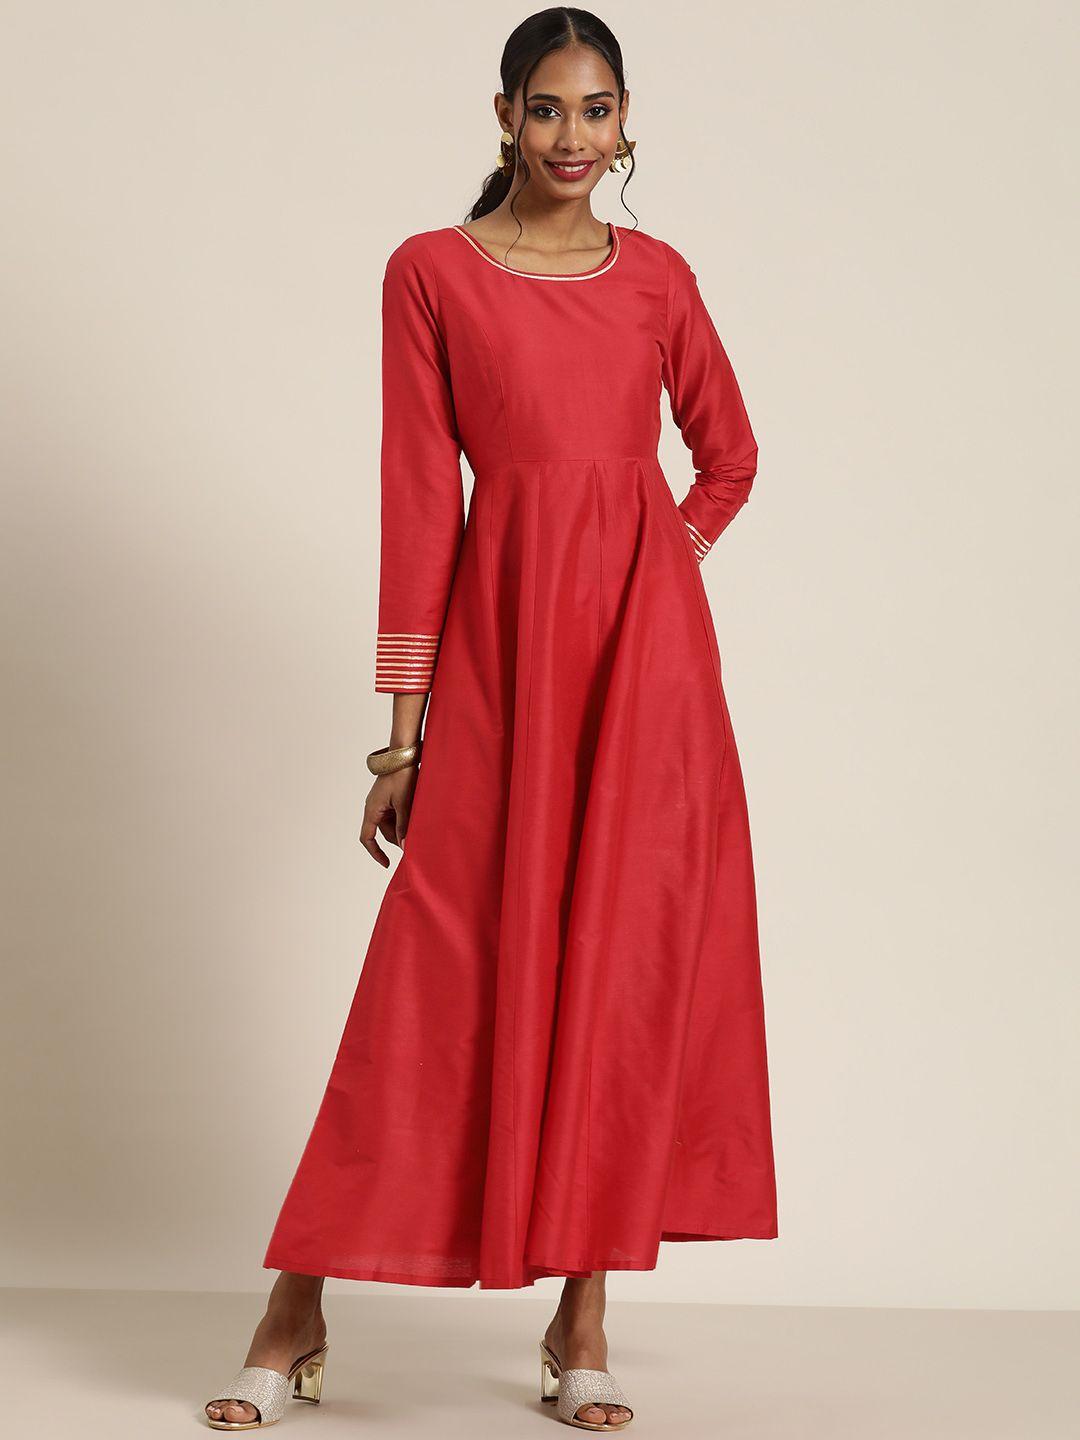 shae by sassafras red ethnic maxi dress